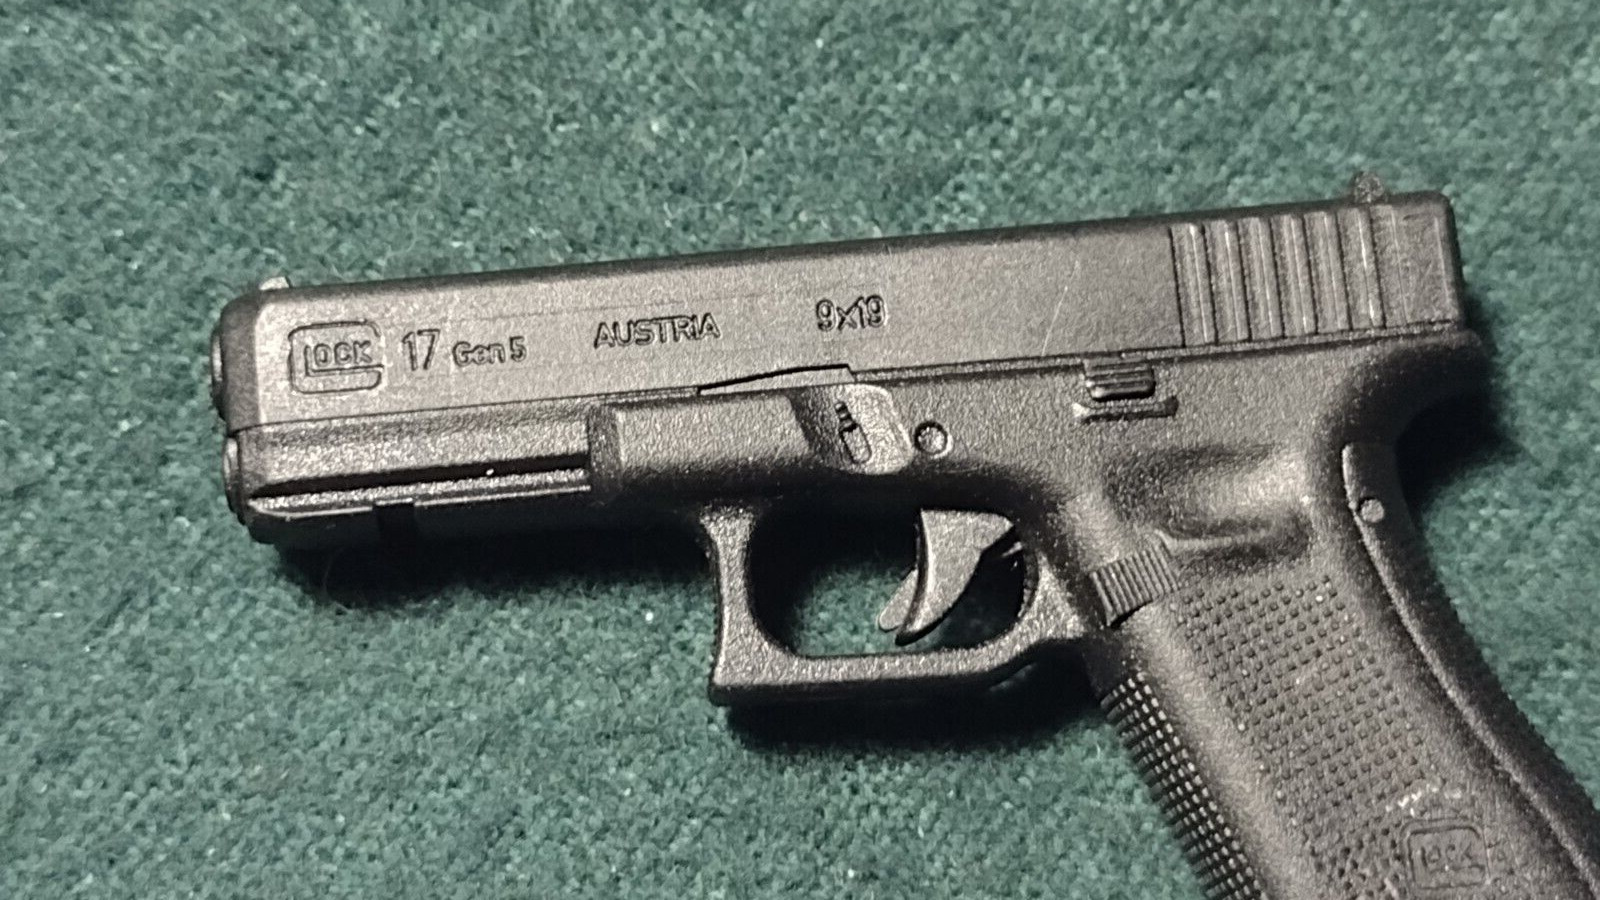 GLOCK 17 Gen5 AUSTRIA 9X19 9MM Mini Firearm Handgun Pistol KEYCHAIN SHOT-SHOW